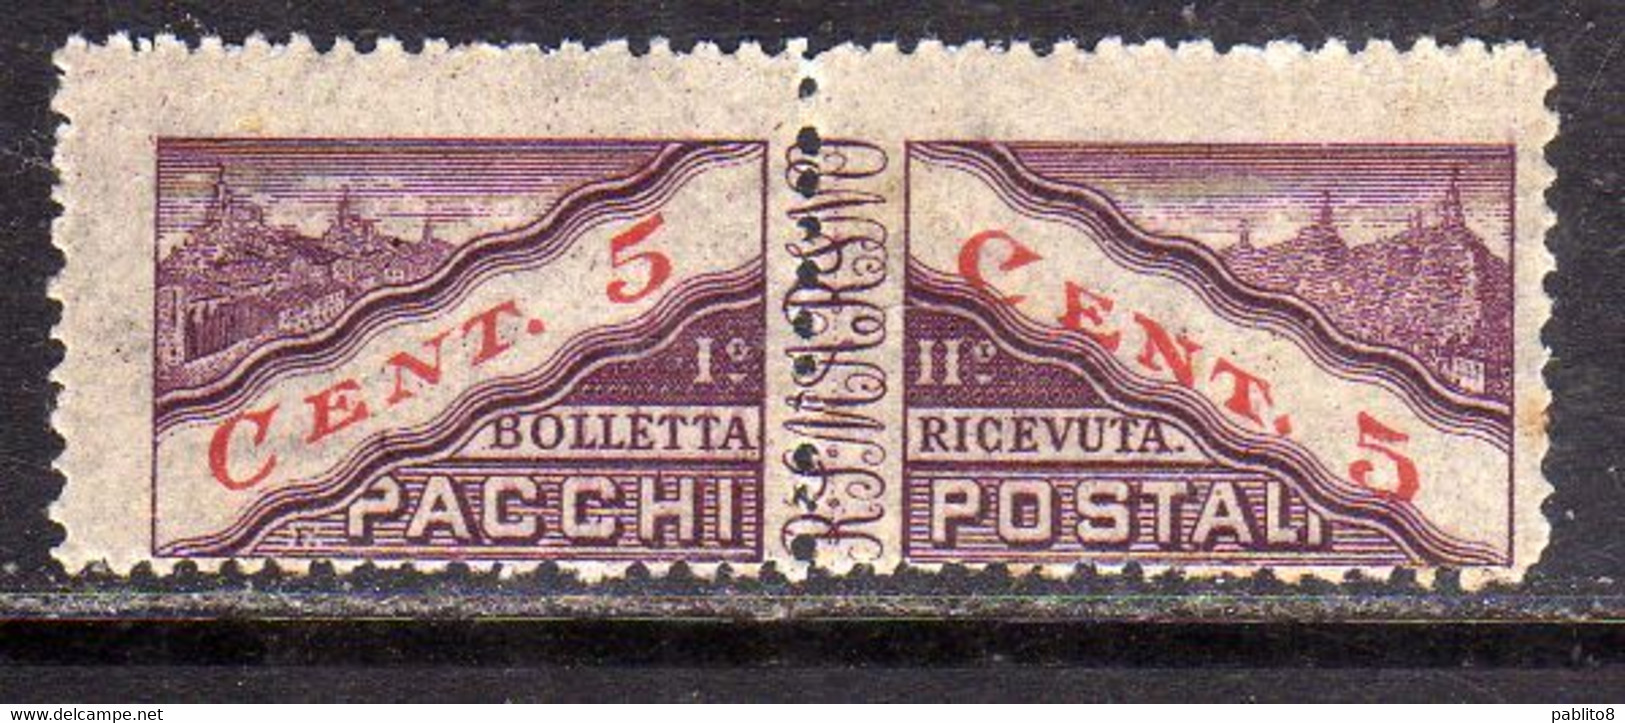 REPUBBLICA DI SAN MARINO 1945 PACCHI POSTALI PARCEL POST CENT. 5c MNH - Parcel Post Stamps